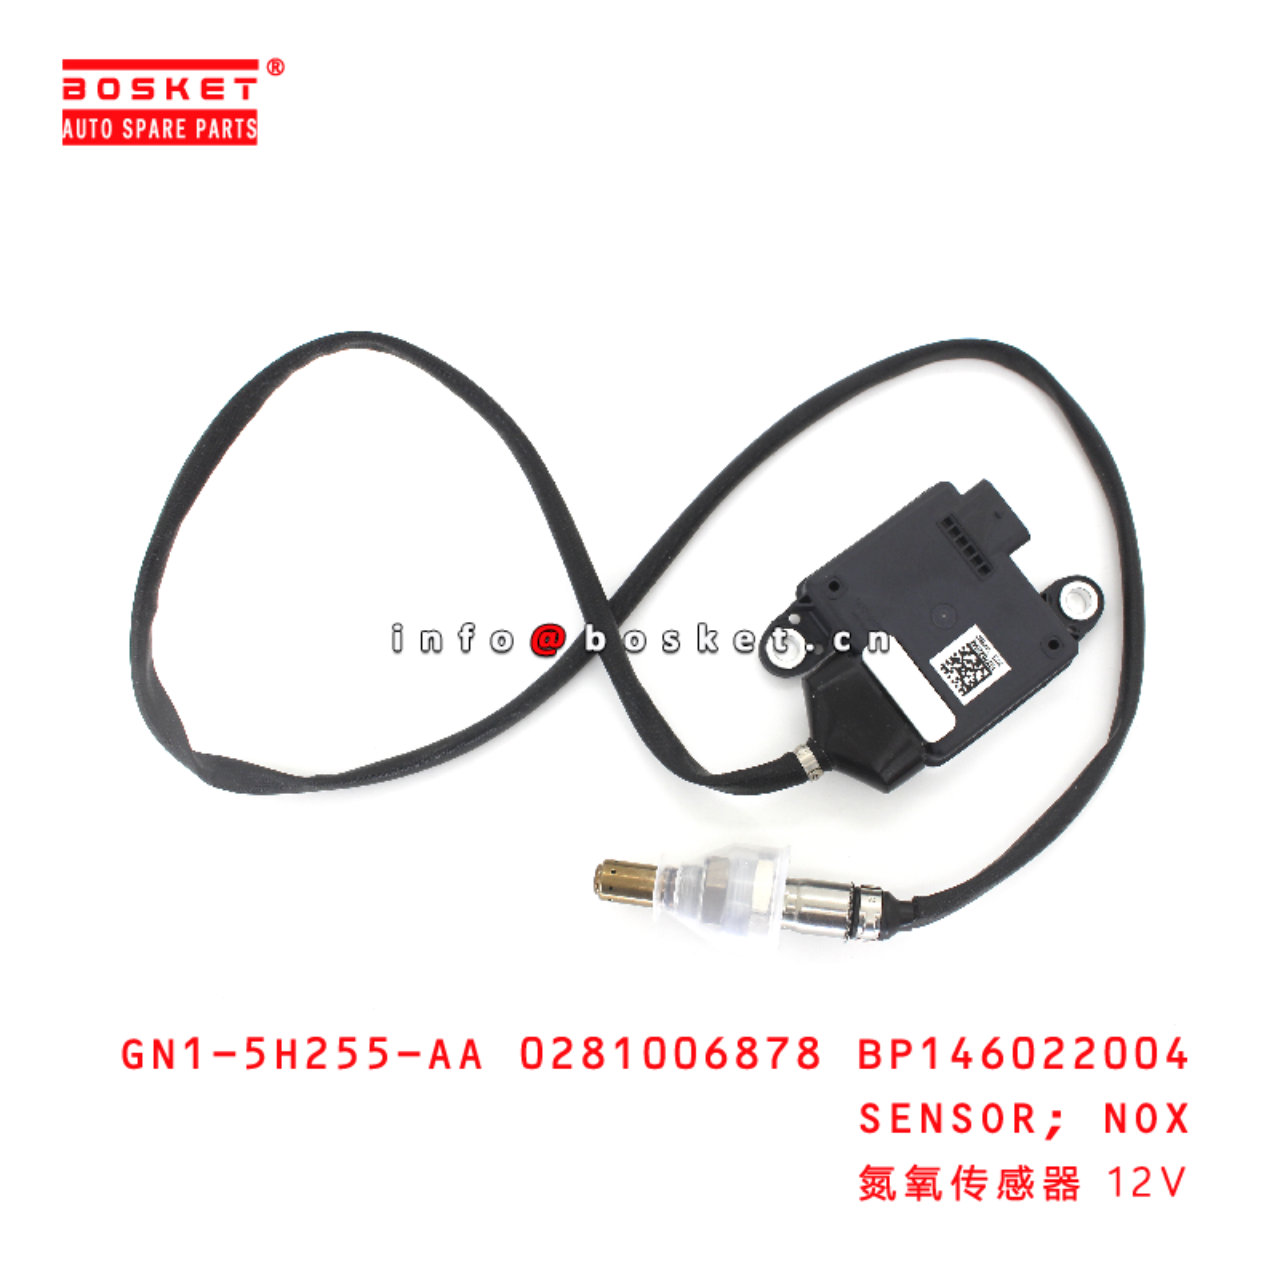 GN1-5H255-AA 0281006878 BP146022004 Nox Sensor suitable for JMC GN1-5H255-AA